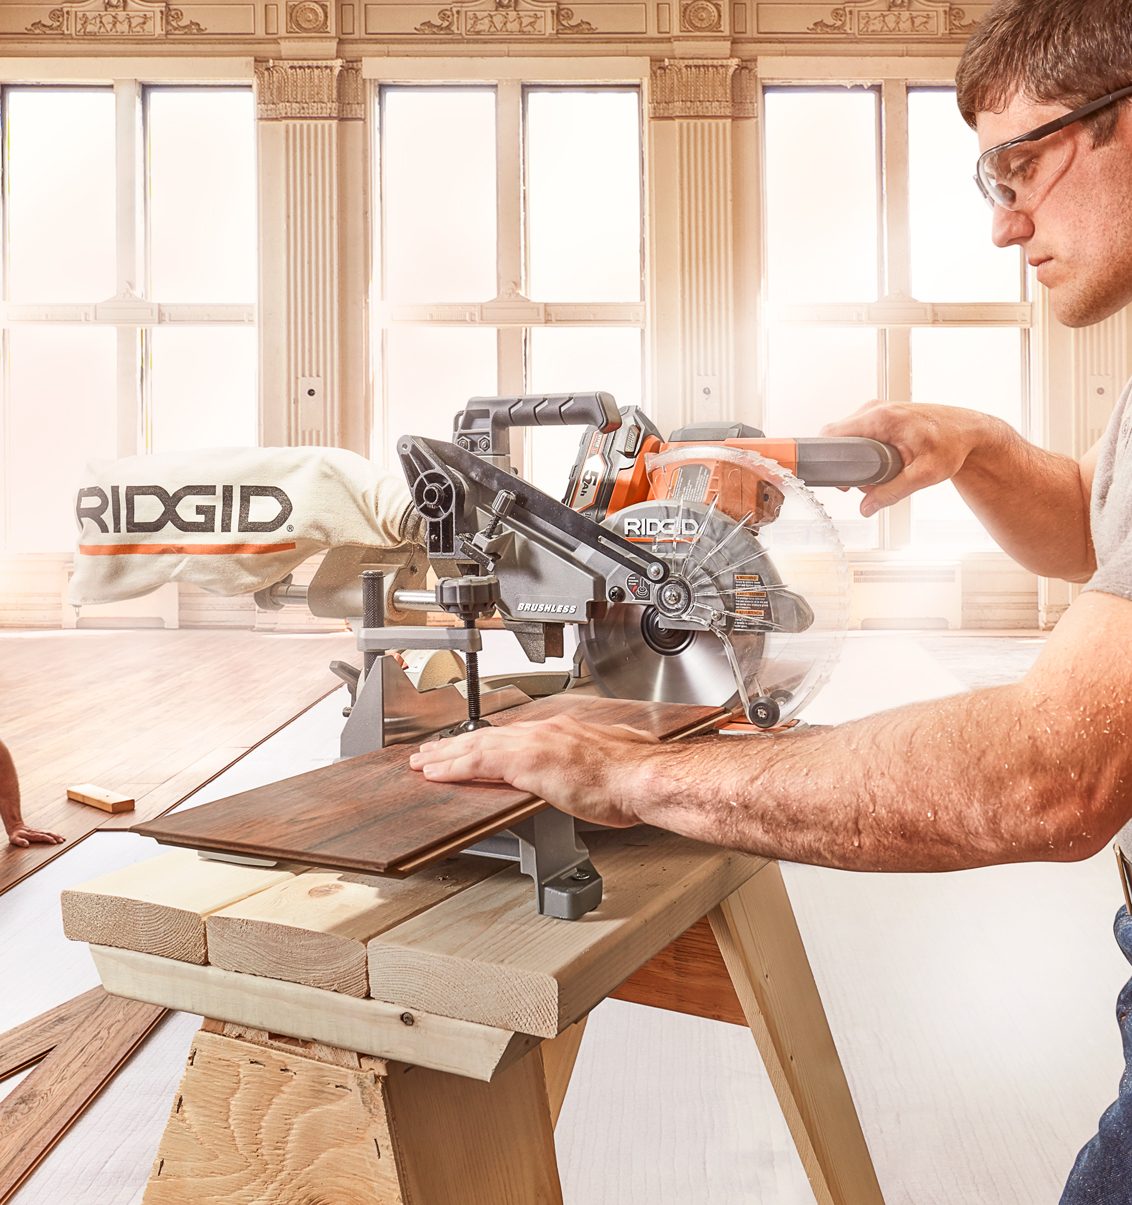 Power tool, Glasses, Window, Wood, Table, Tradesman, Carpenter, Artisan